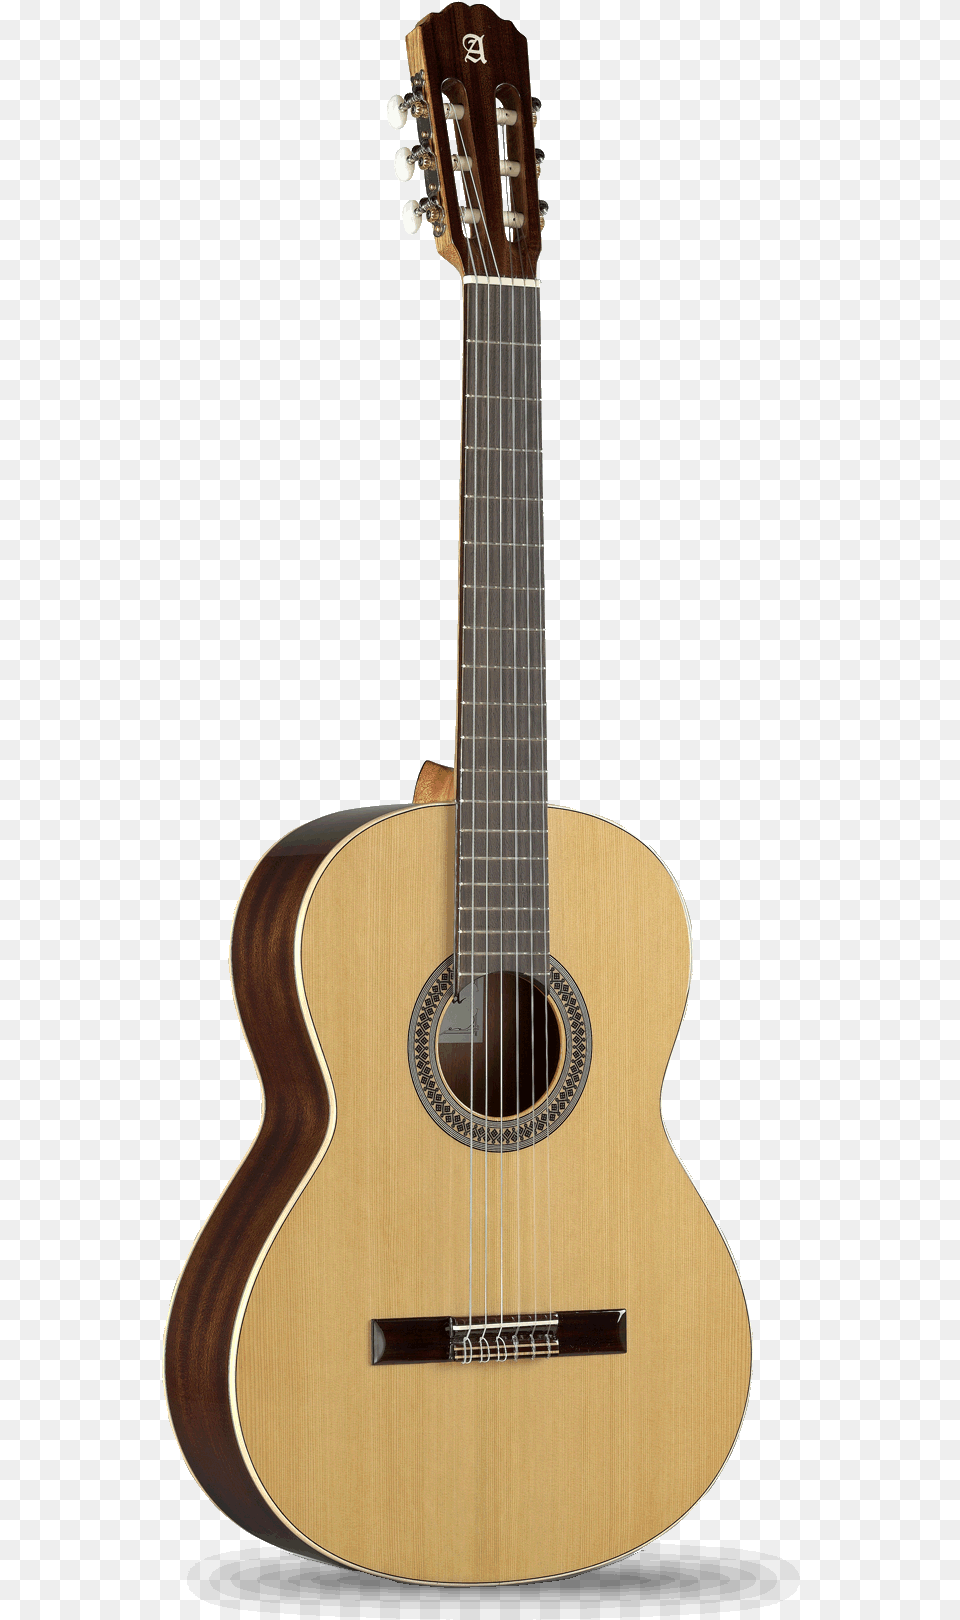 Alhambra Guitar, Musical Instrument Png Image